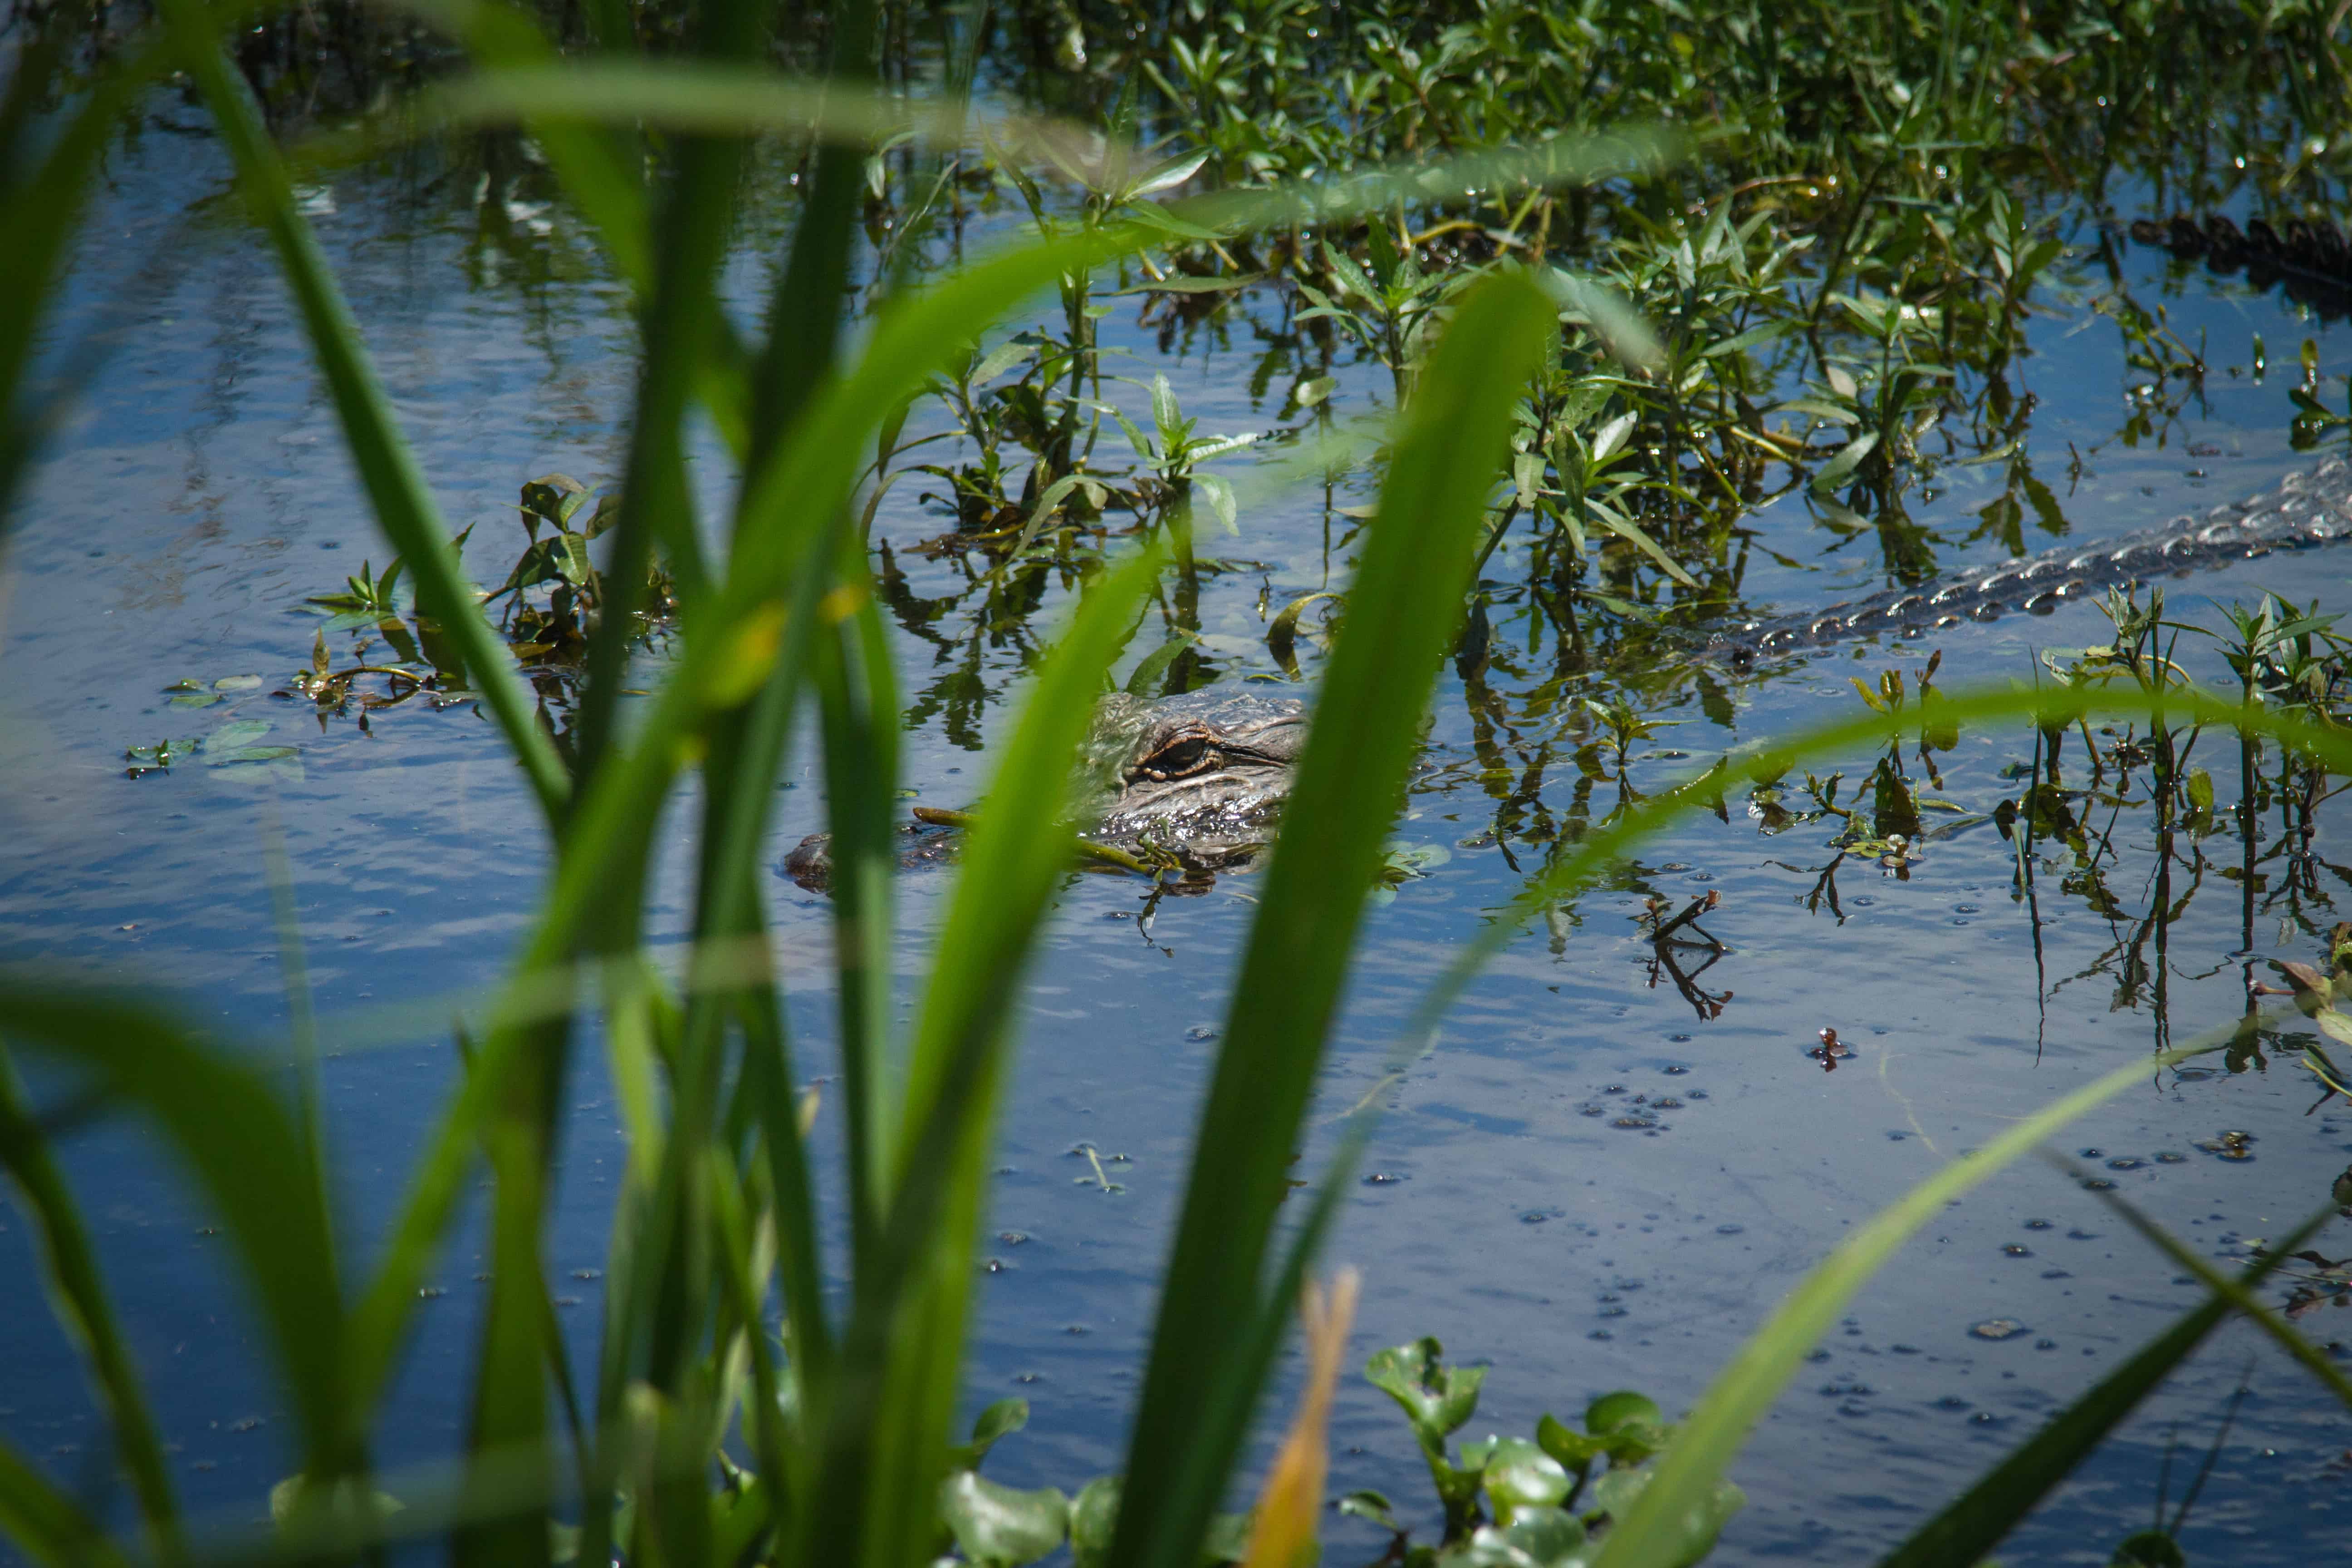 Alligator seen on Eco-tour Lake Charles